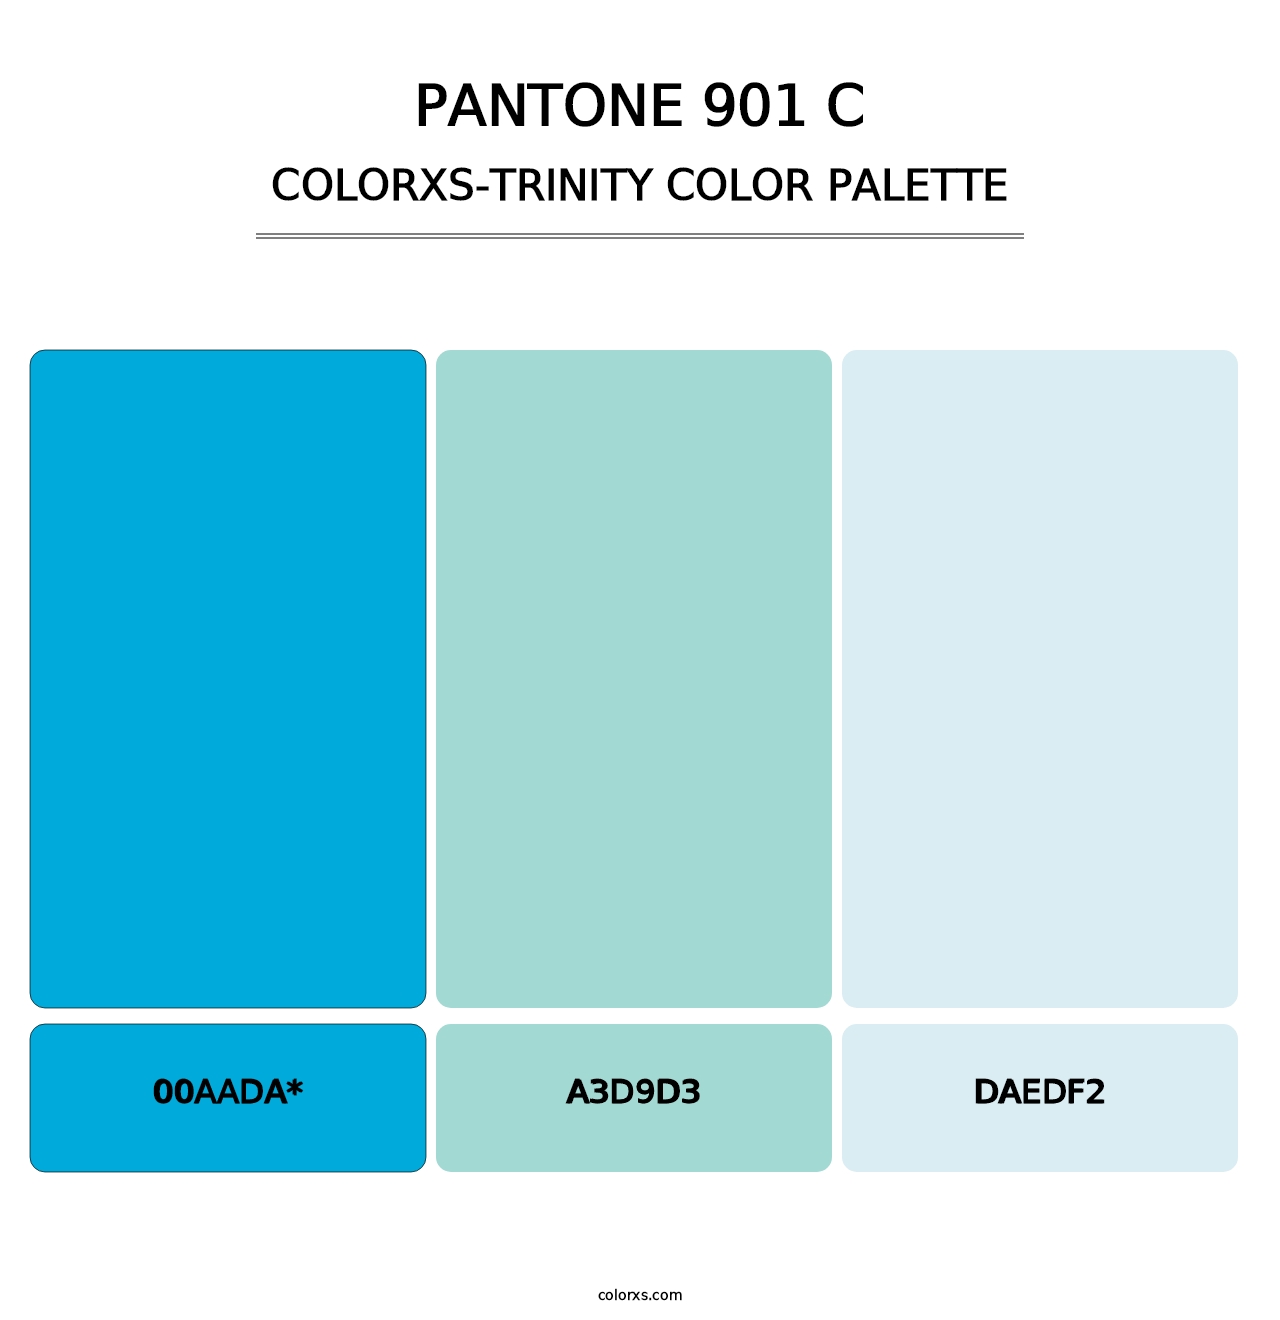 PANTONE 901 C - Colorxs Trinity Palette